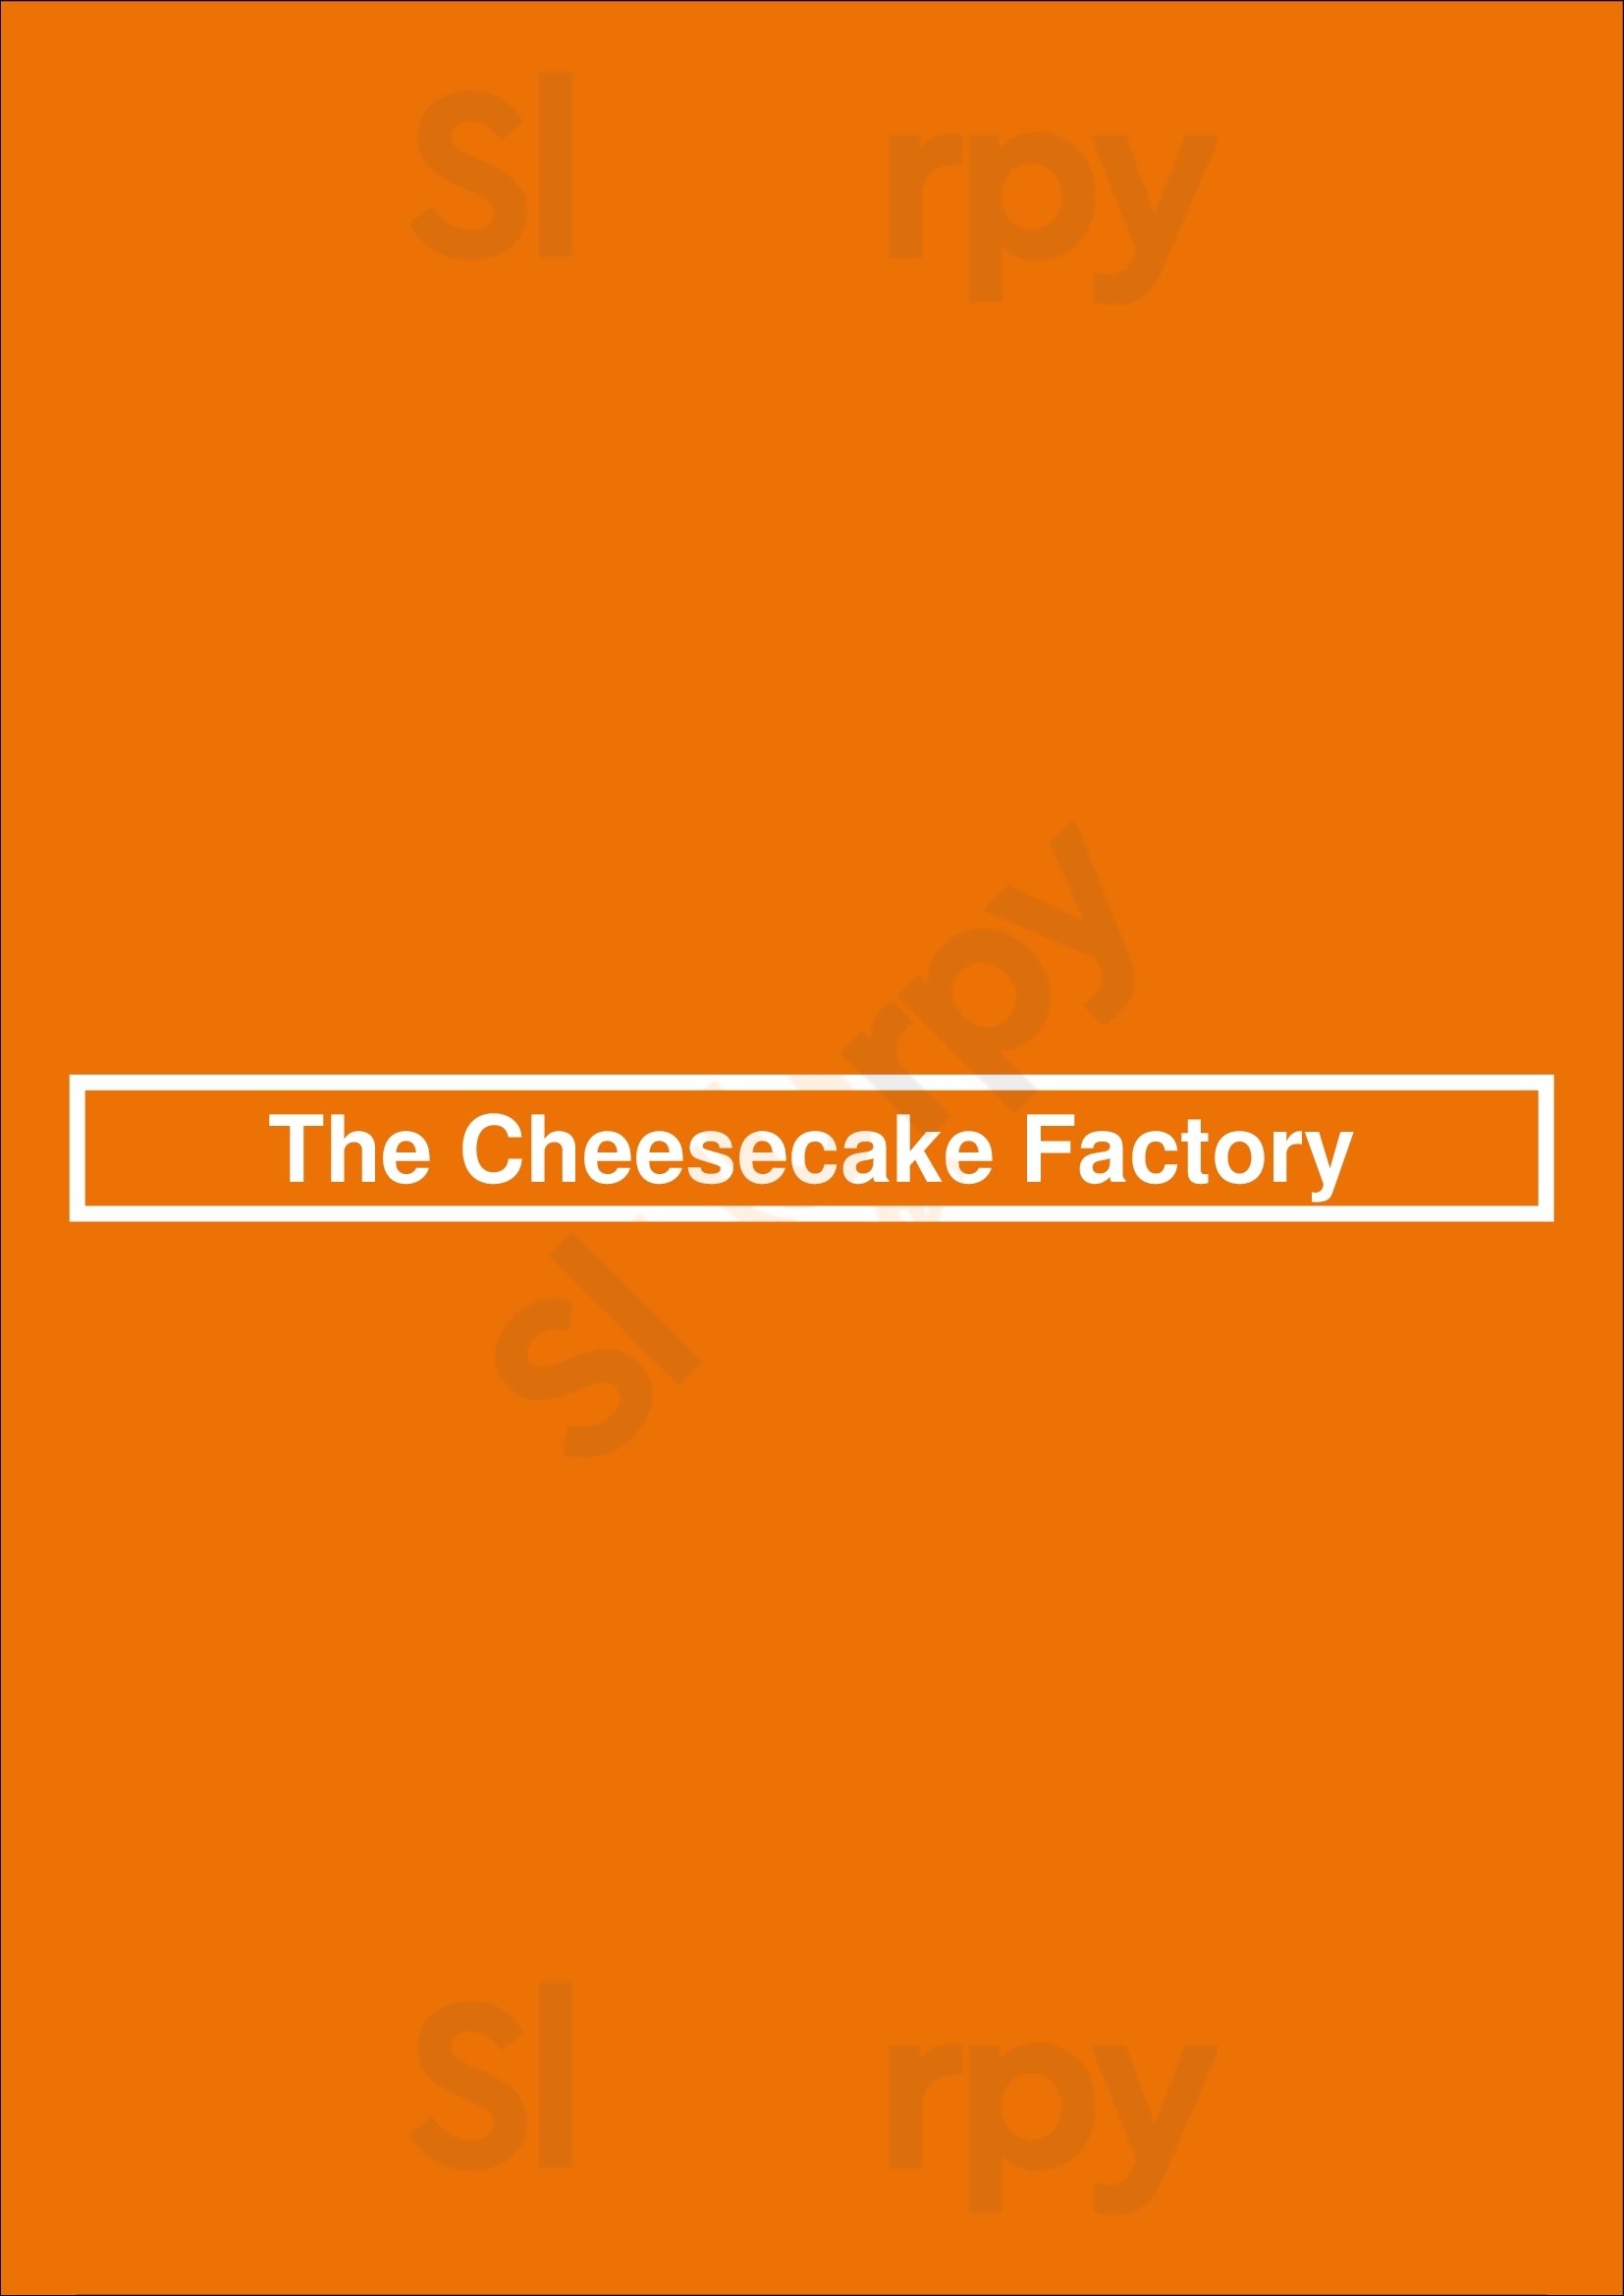 The Cheesecake Factory Huntington Beach Menu - 1